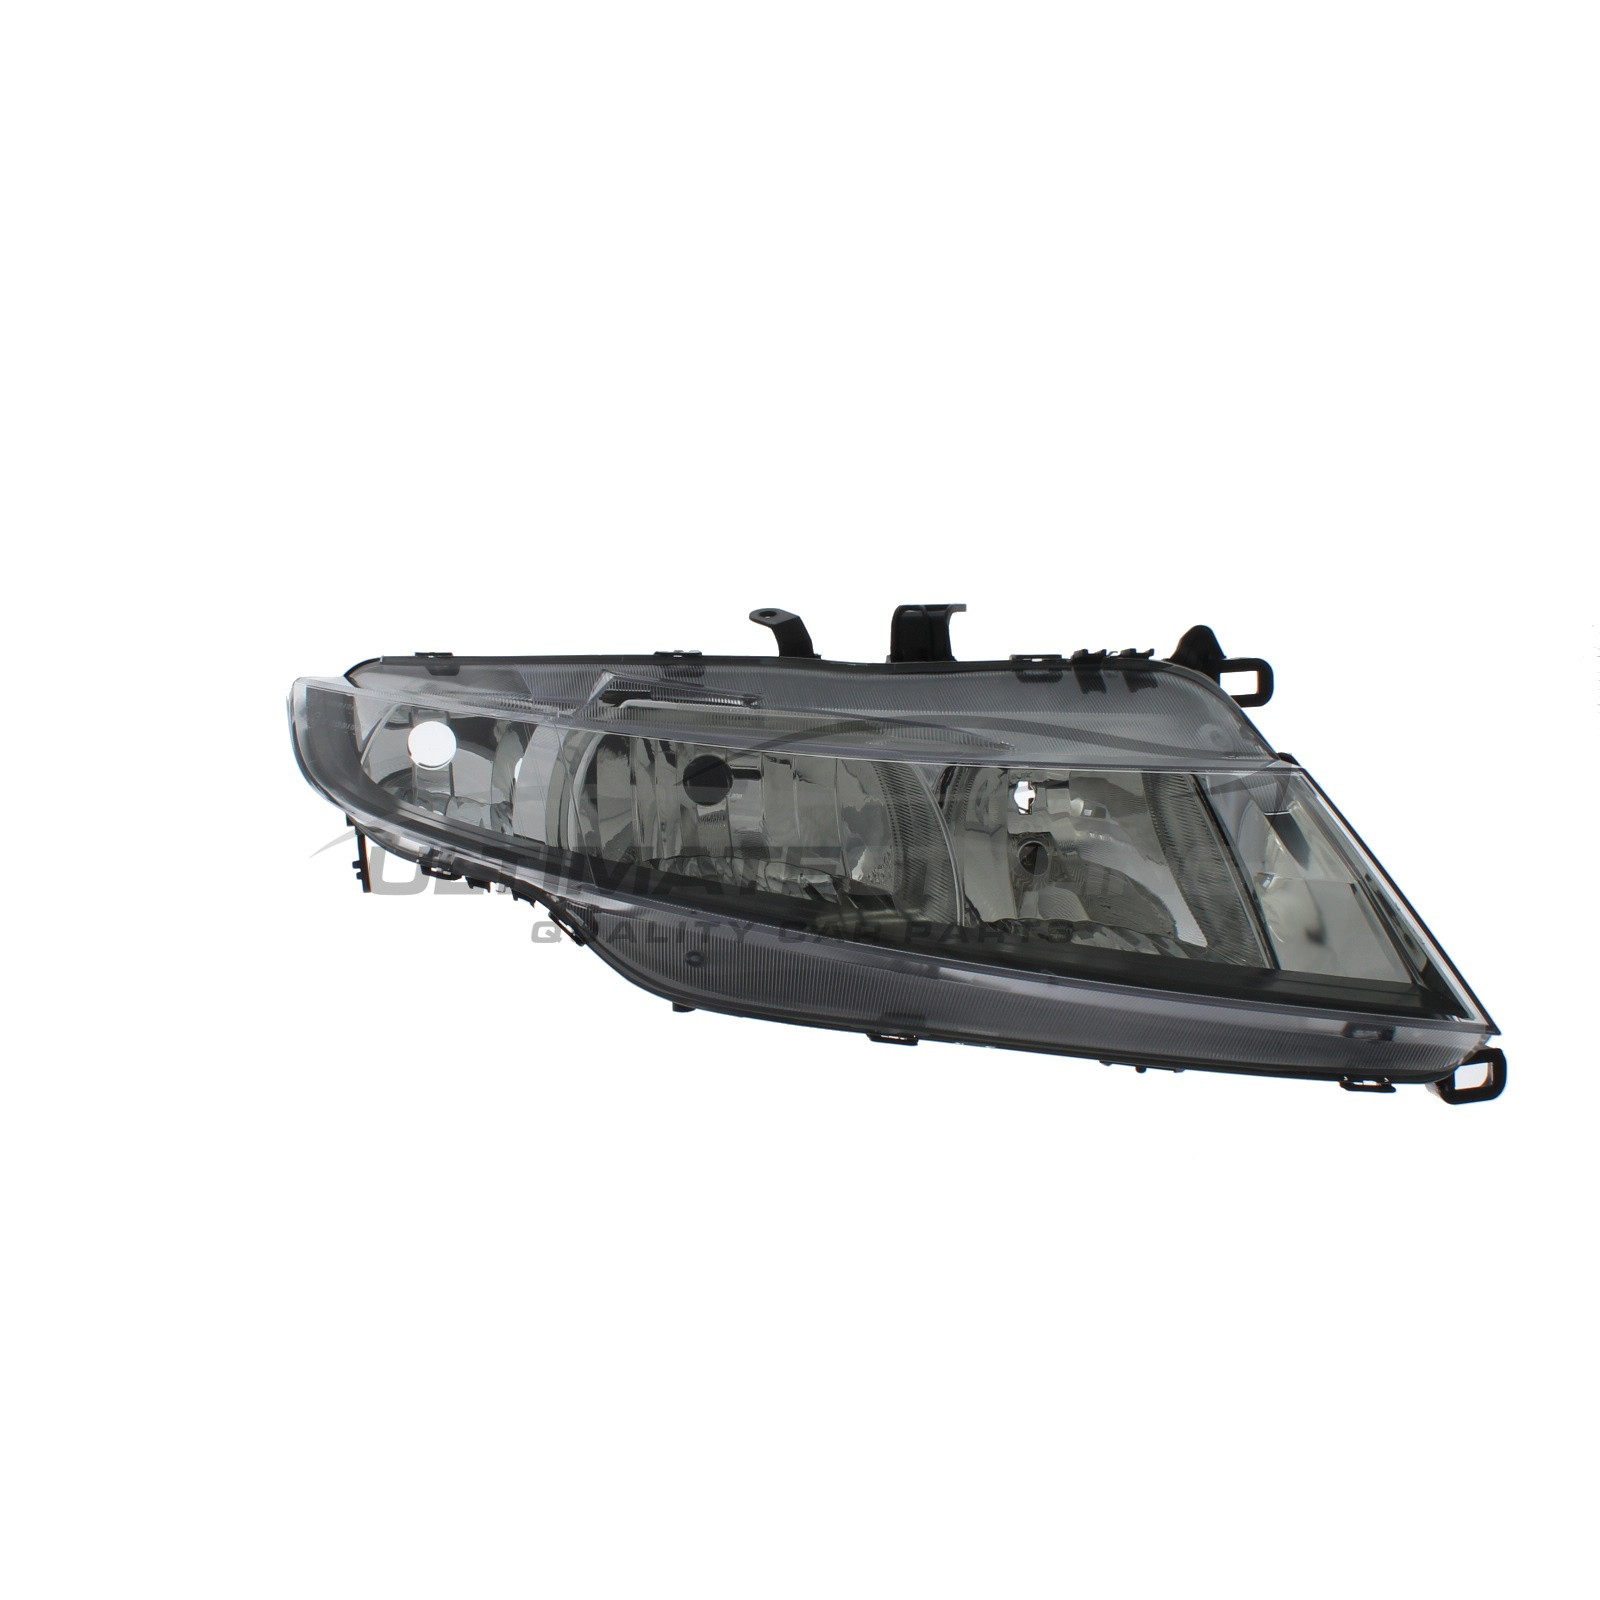 Headlight / Headlamp for Honda Civic